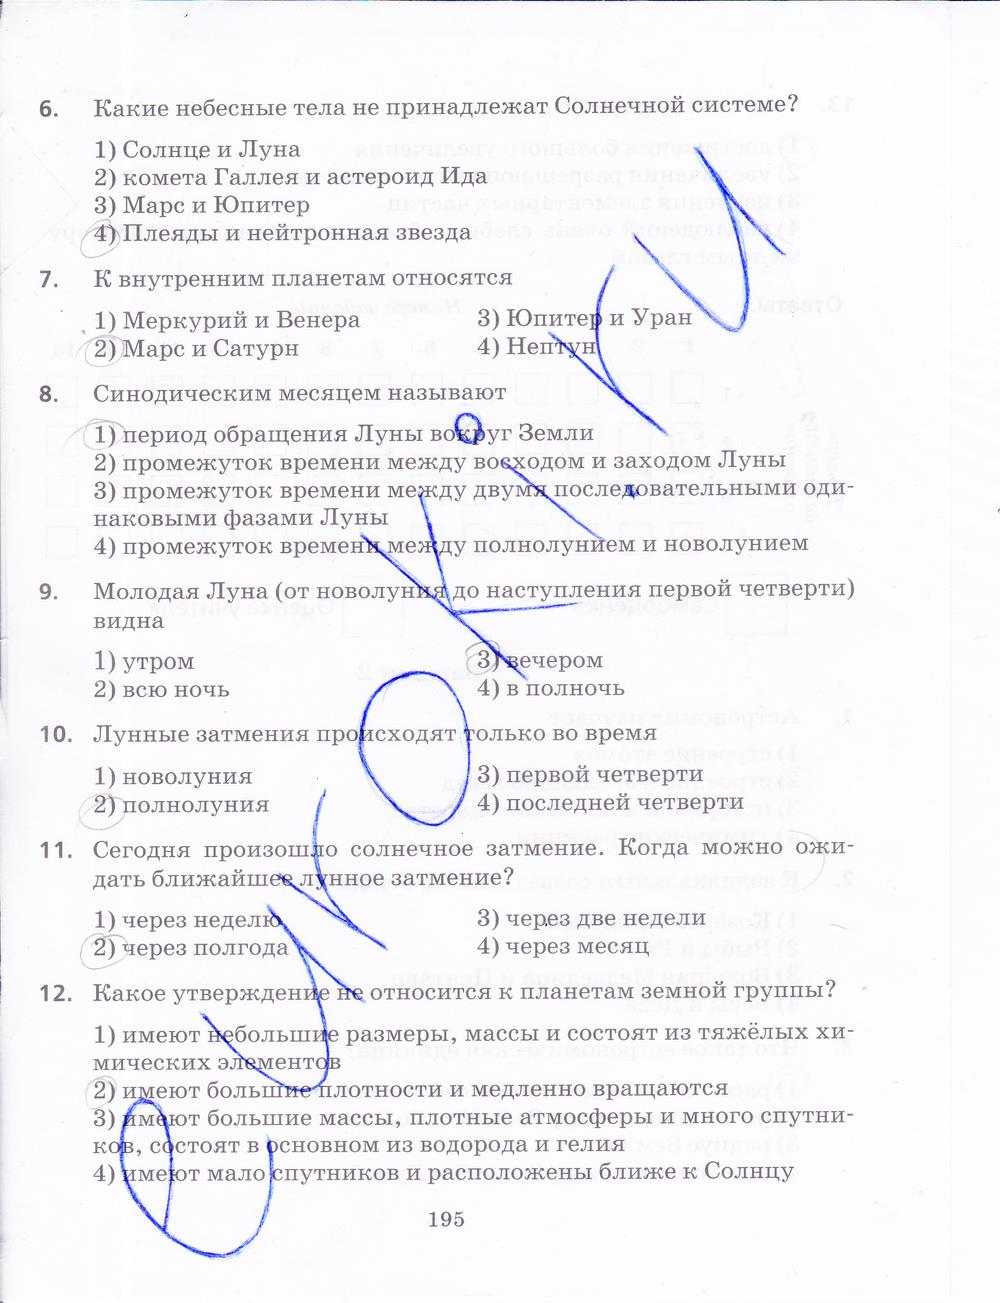 гдз 9 класс рабочая тетрадь страница 195 физика Пурышева, Важеевская, Чаругин